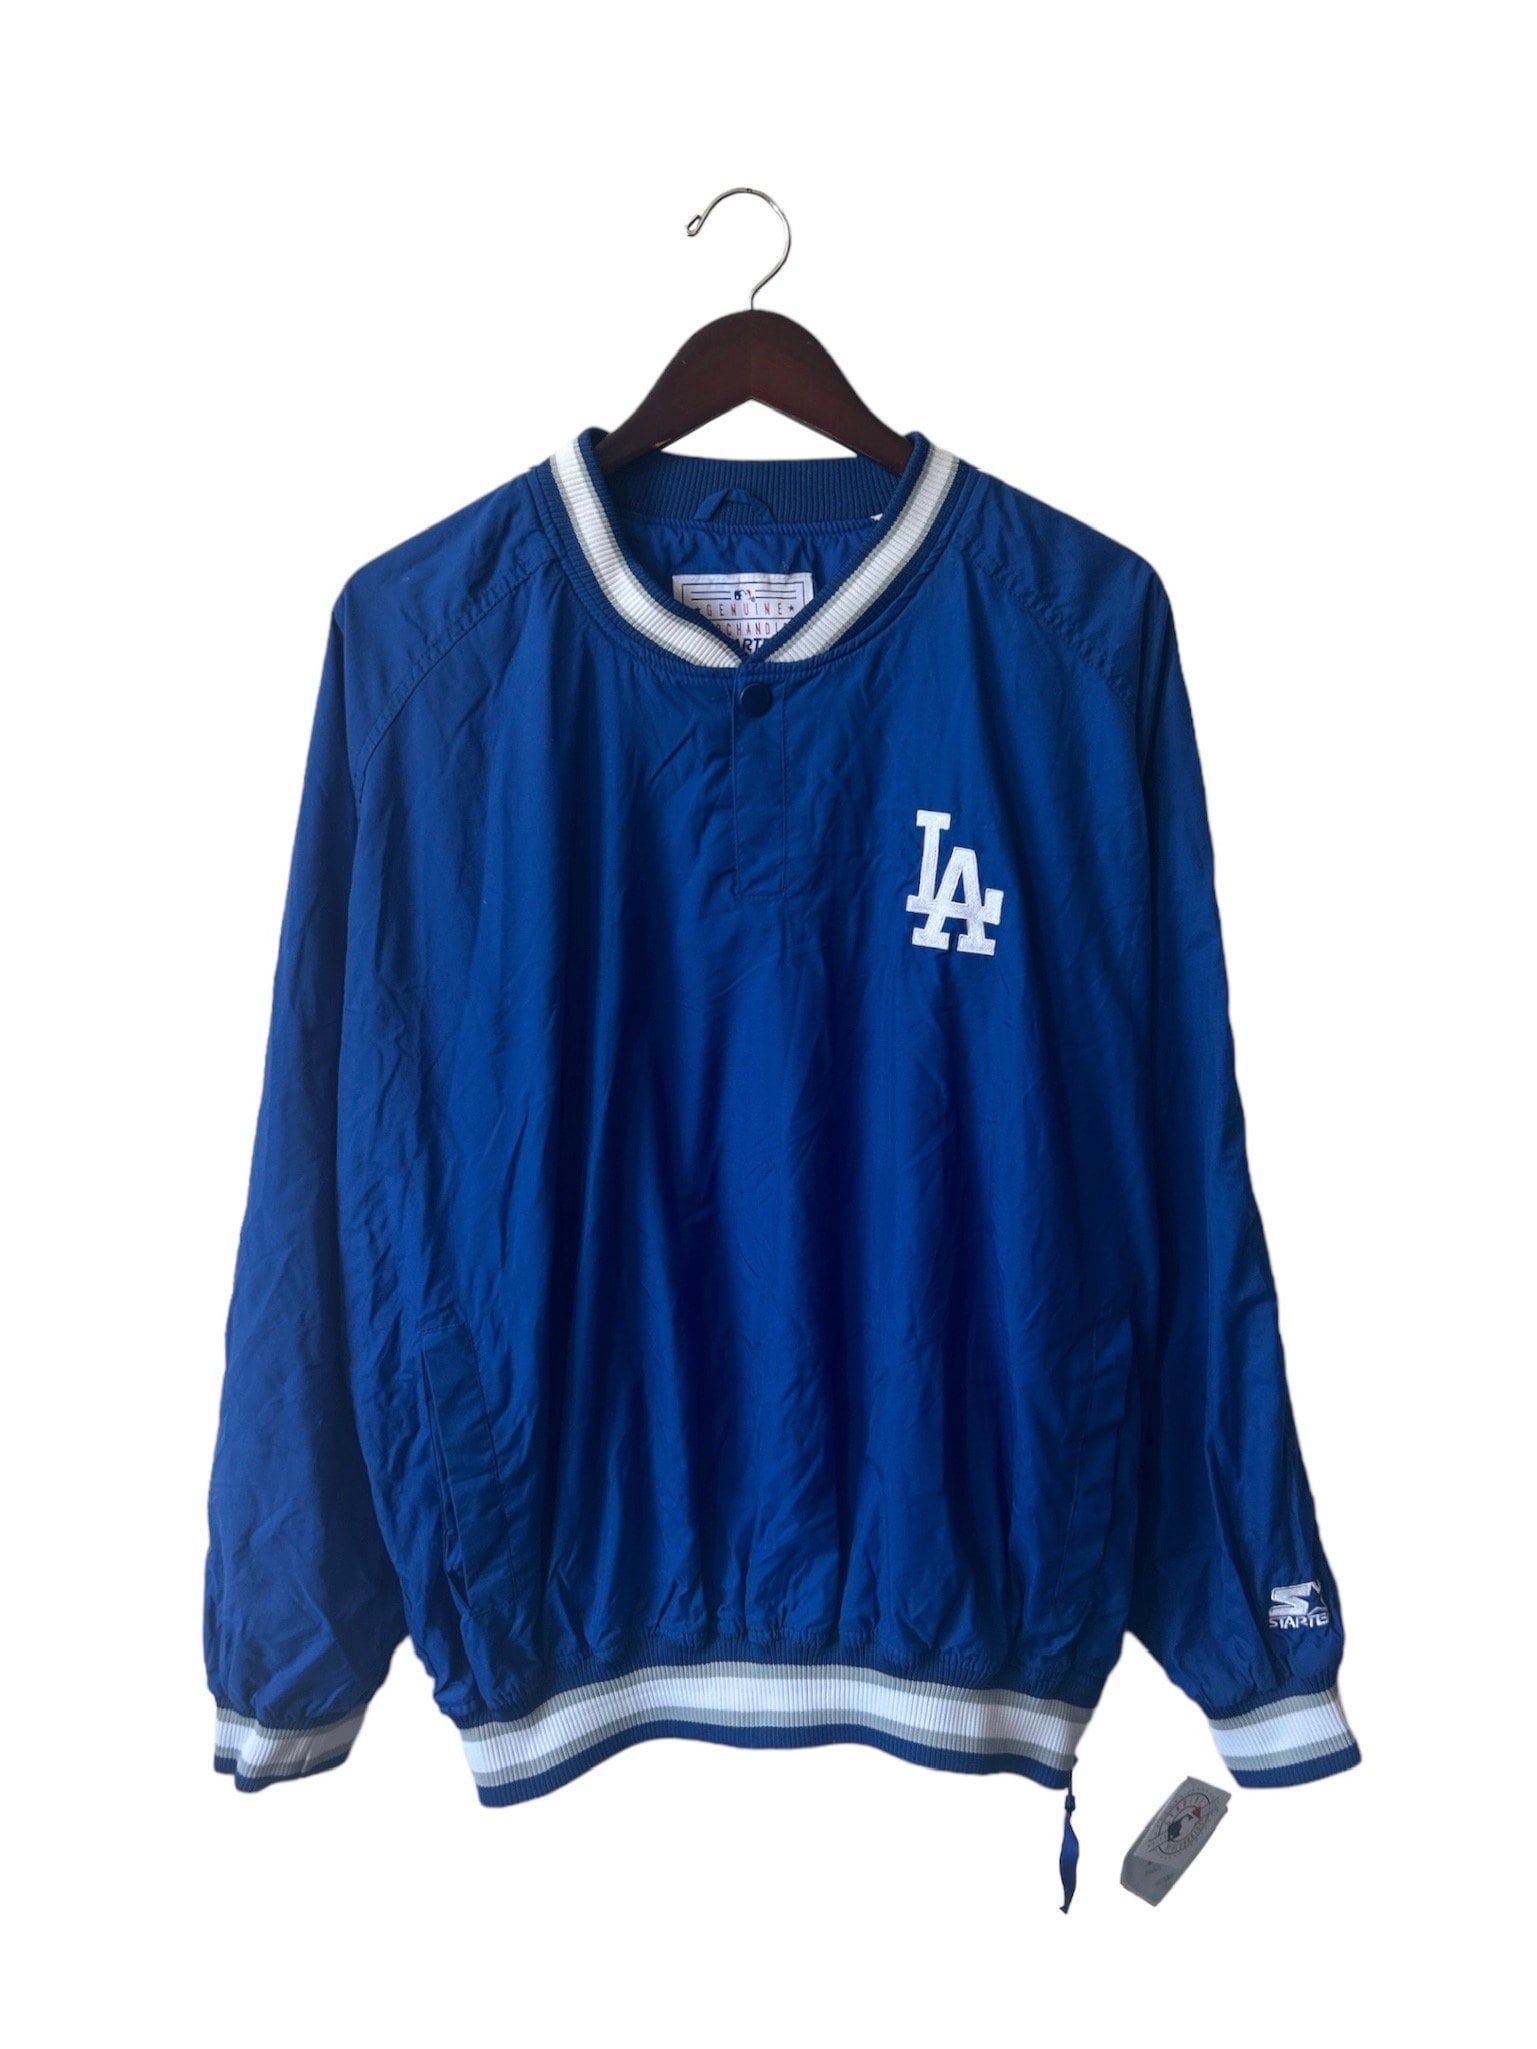 Mookie Betts #50 Los Angeles Dodgers Black Printed Baseball Jersey-M -  Jerseys & Cleats, Facebook Marketplace